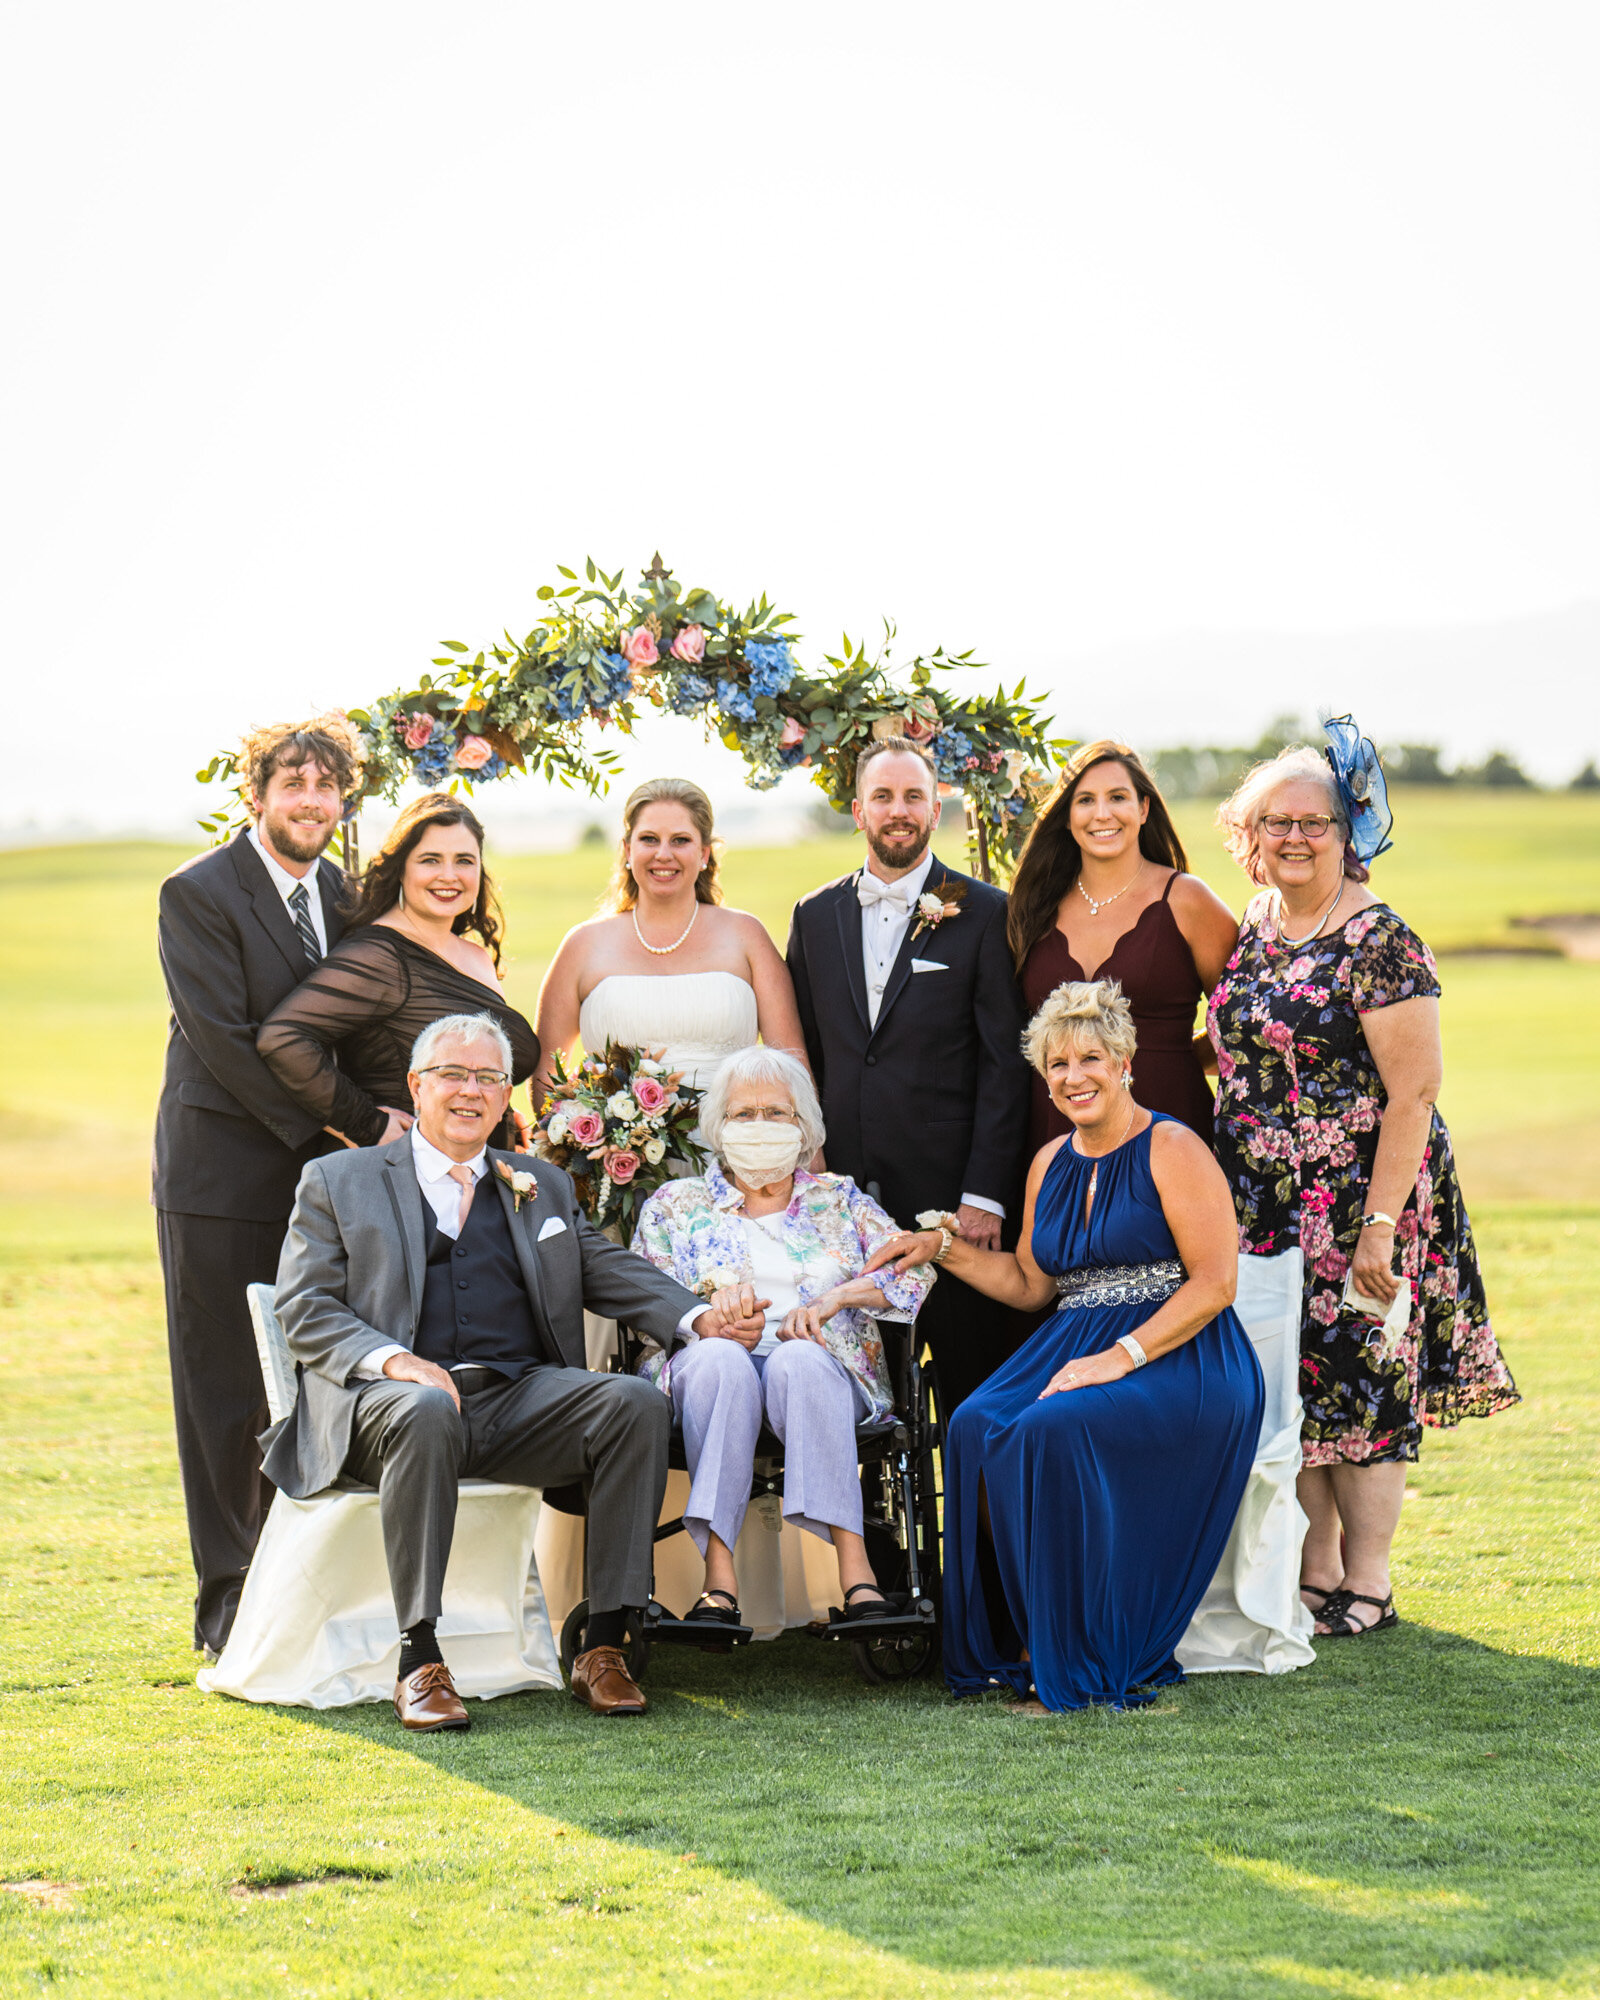 wedding-photography-timeline-denver-colorado-family-formals-reception-details (11).jpg